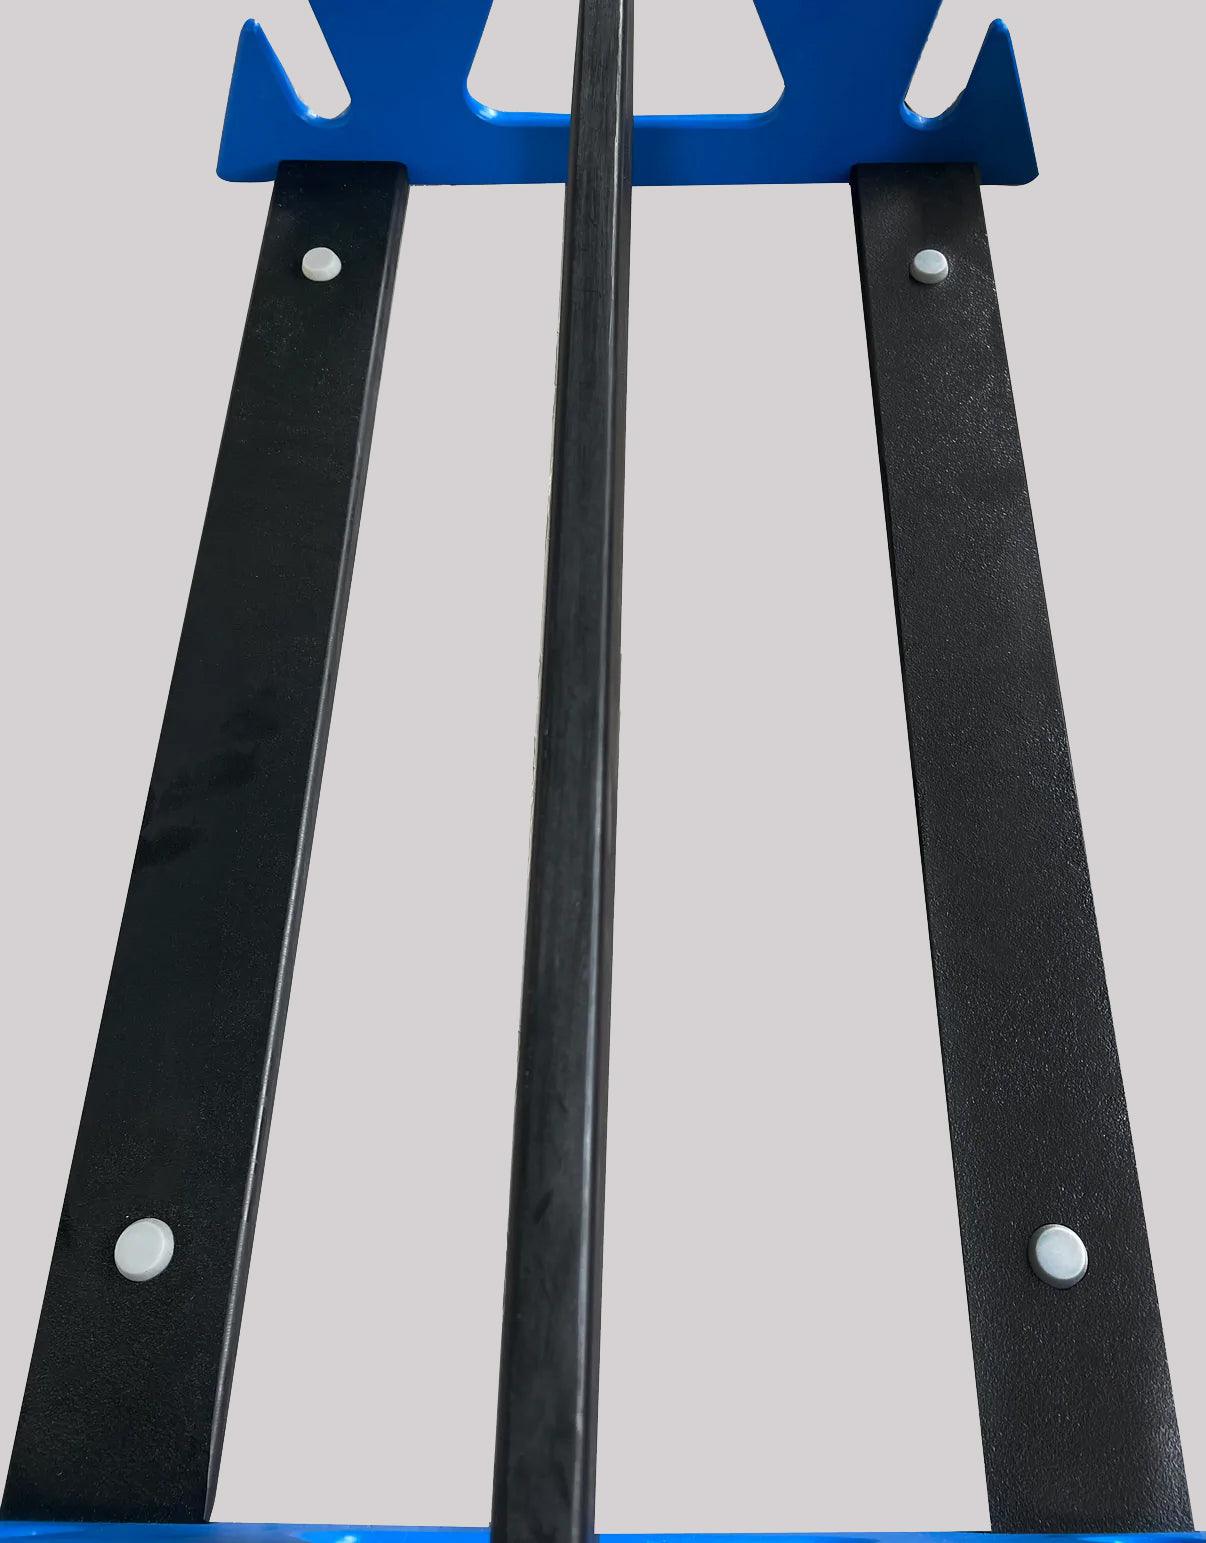 TRAPSKI SIX PACK Wide Stance Snowboard Rack - TRAPSKI, LLC